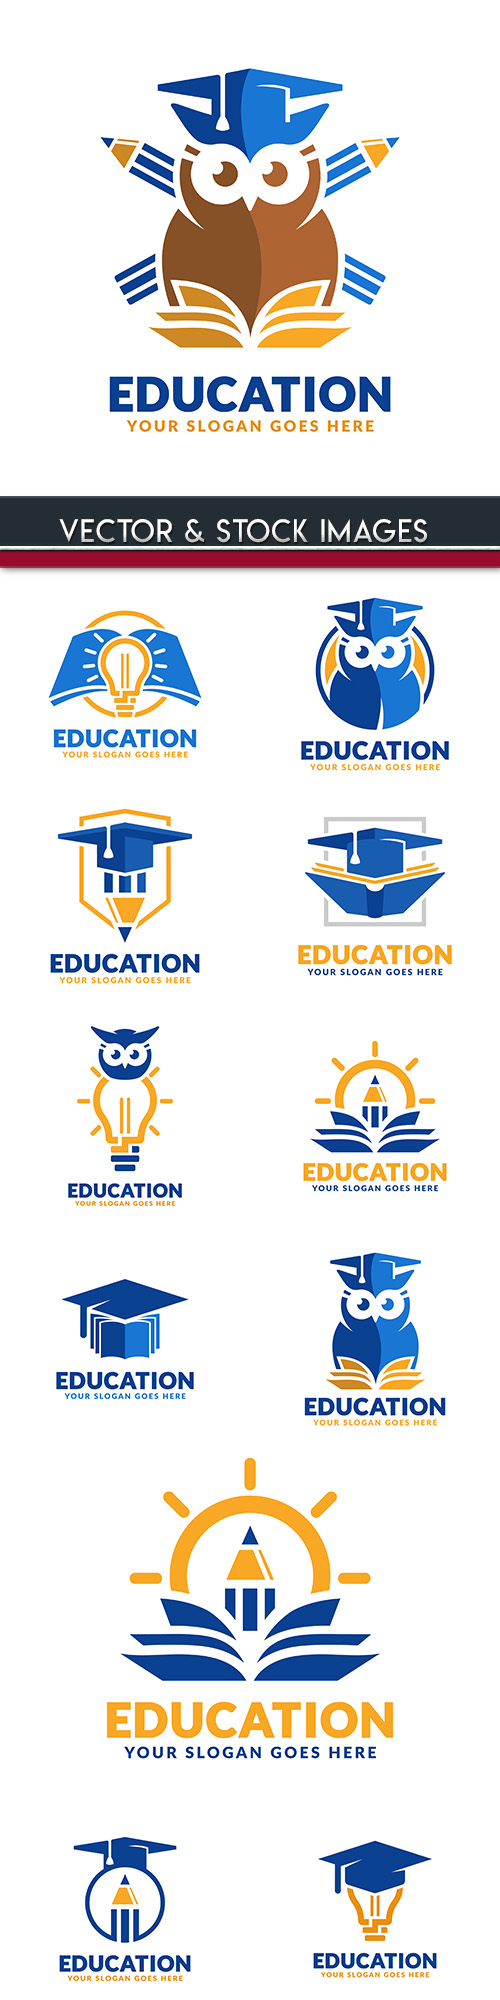 School education creative logos design 26